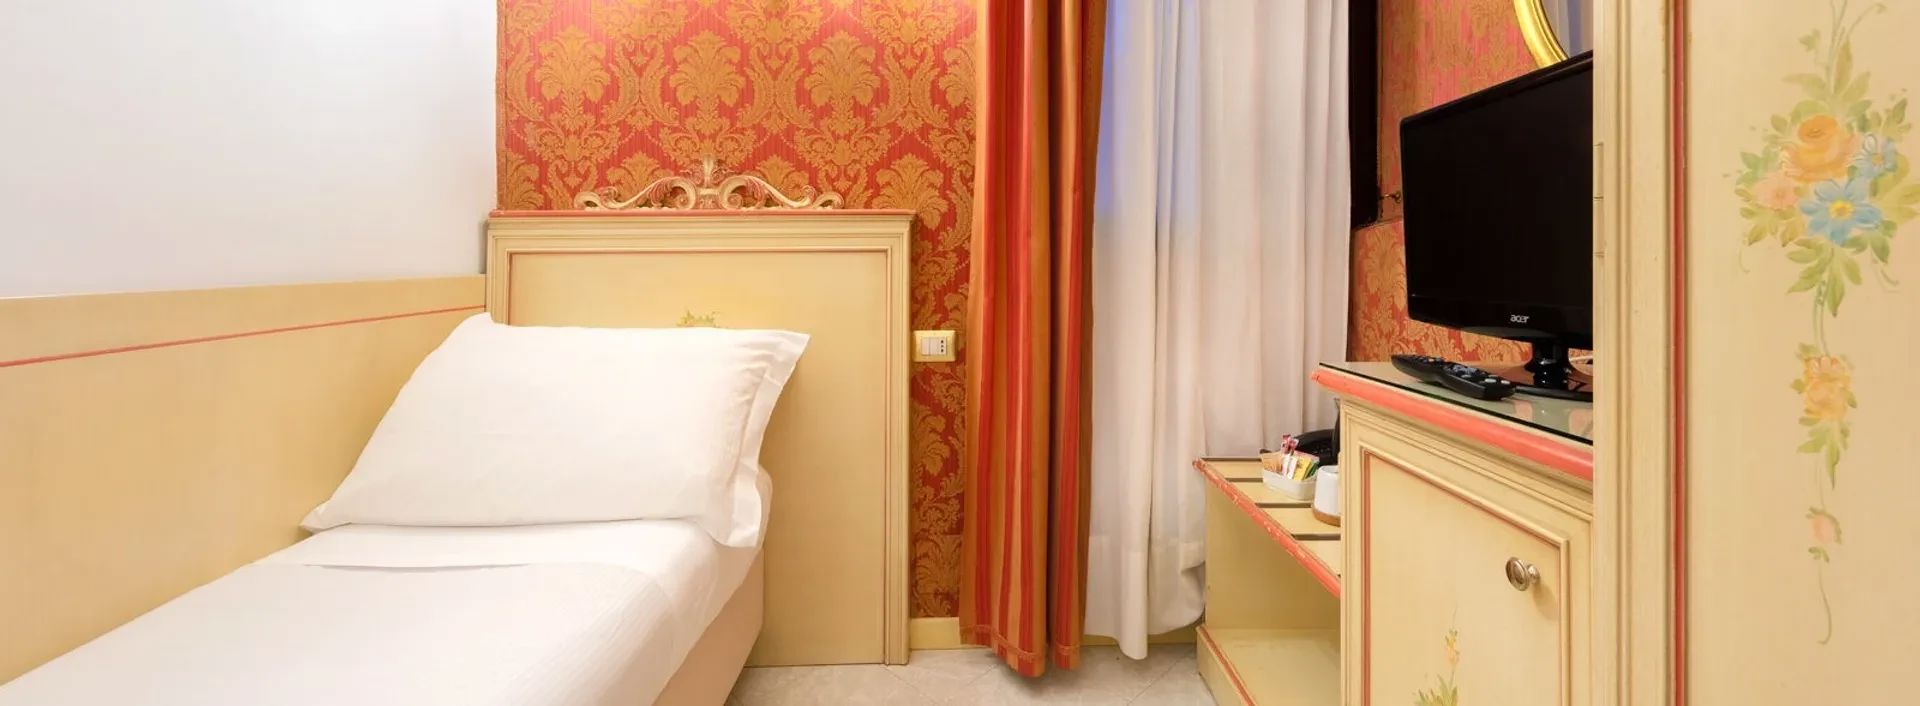 Hotel San Giorgio - Rooms 7